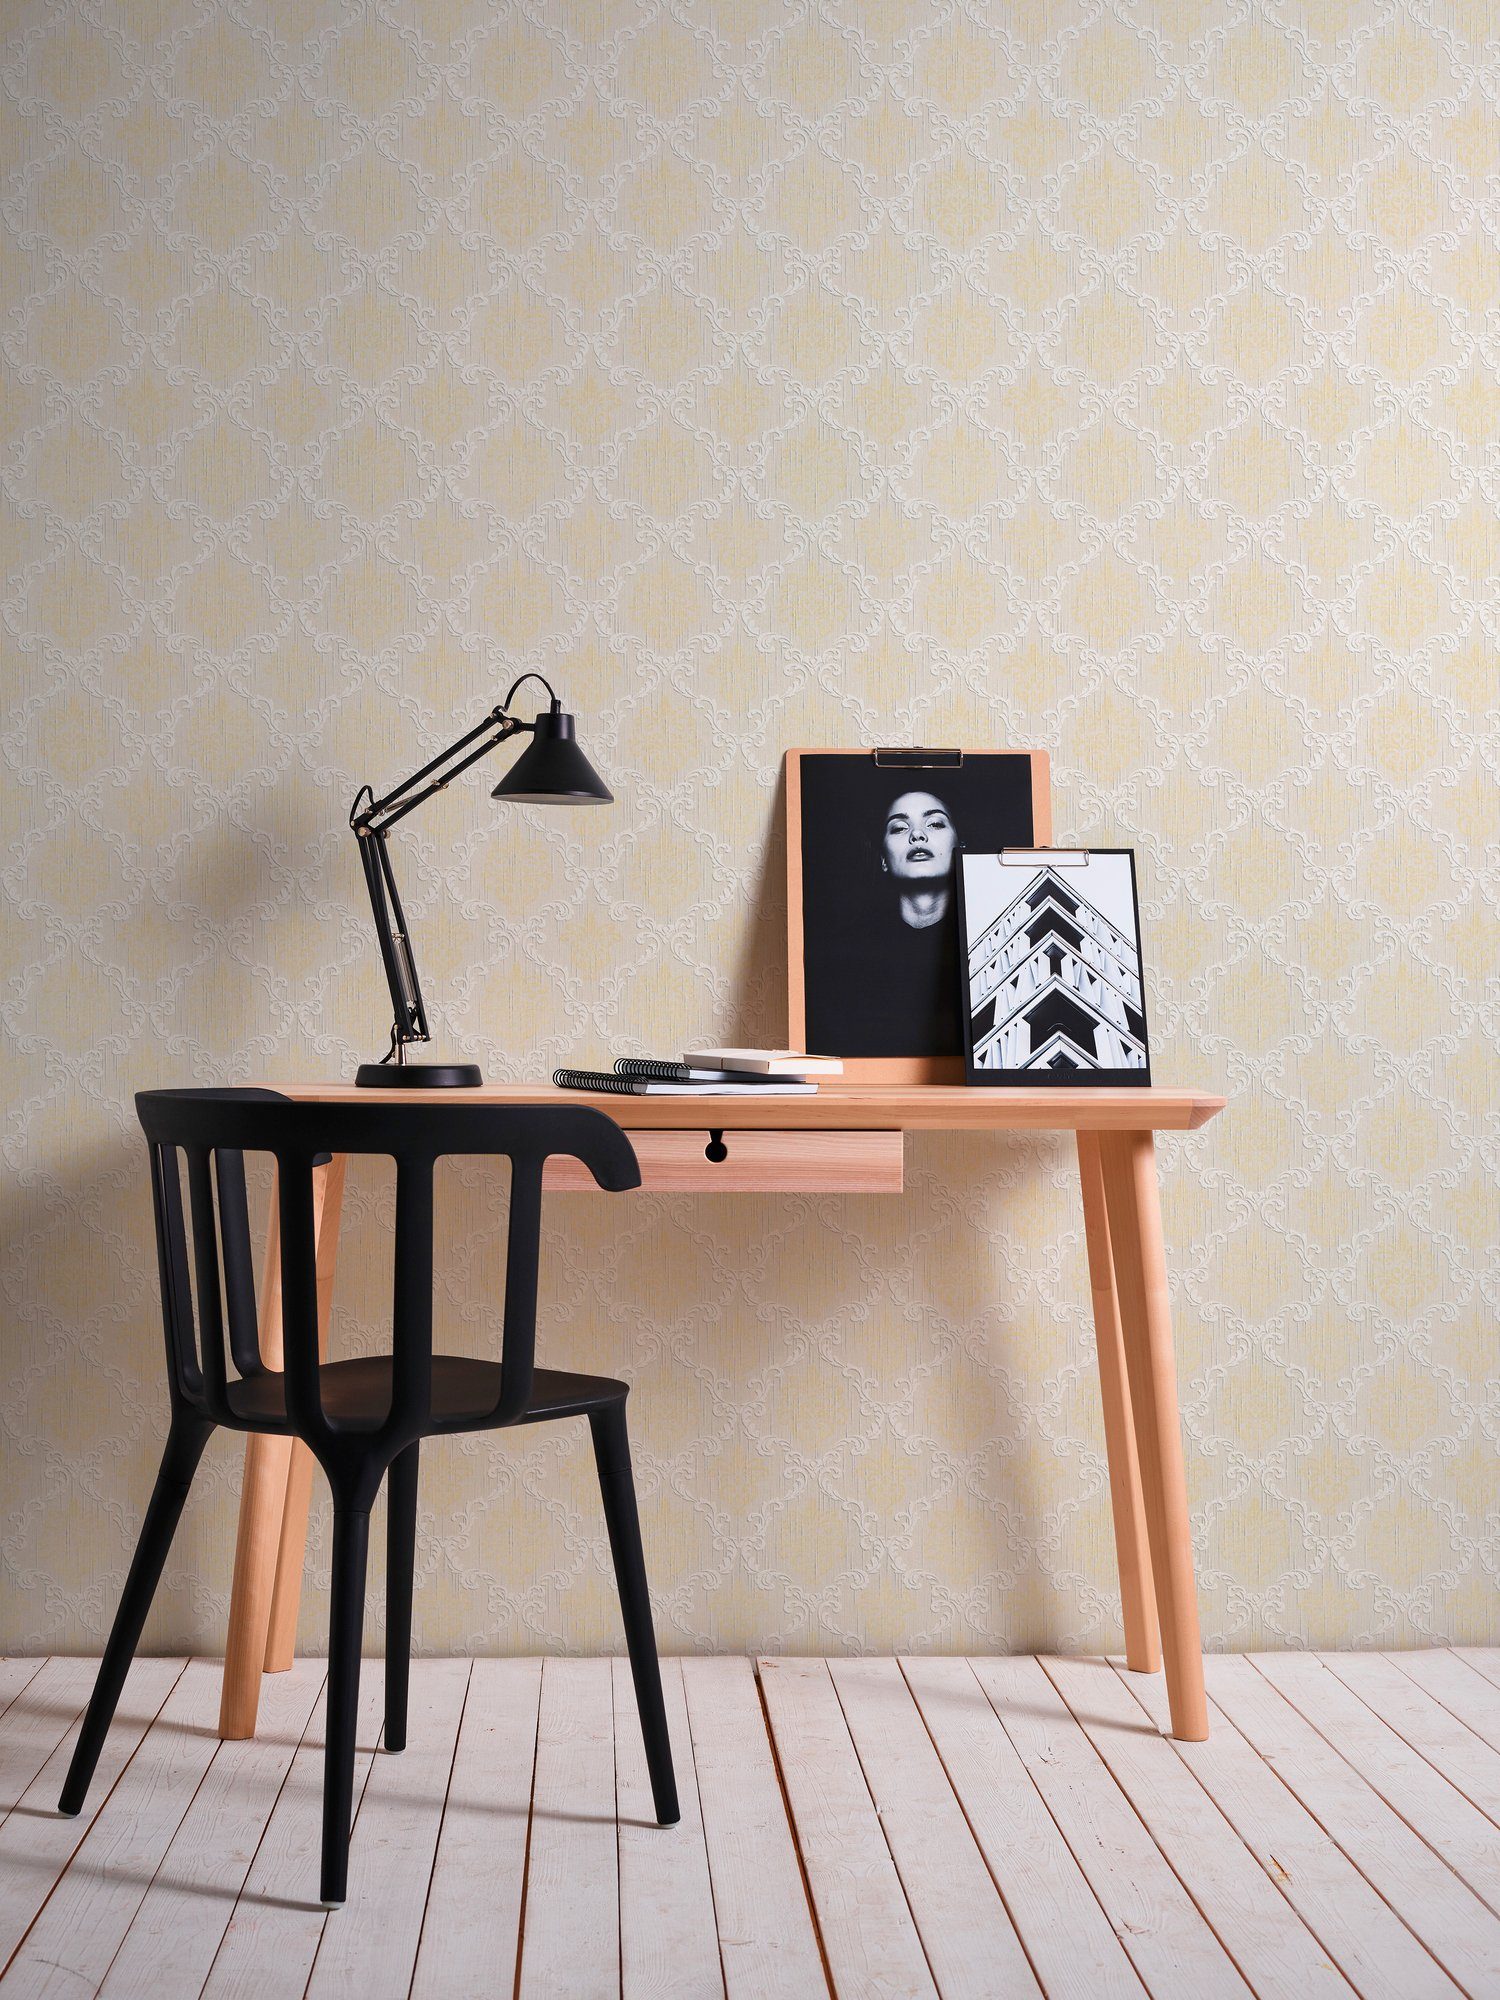 samtig, Barock, creme/gold/beige Tessuto, Paper Création Textiltapete Barock Tapete Architects A.S.